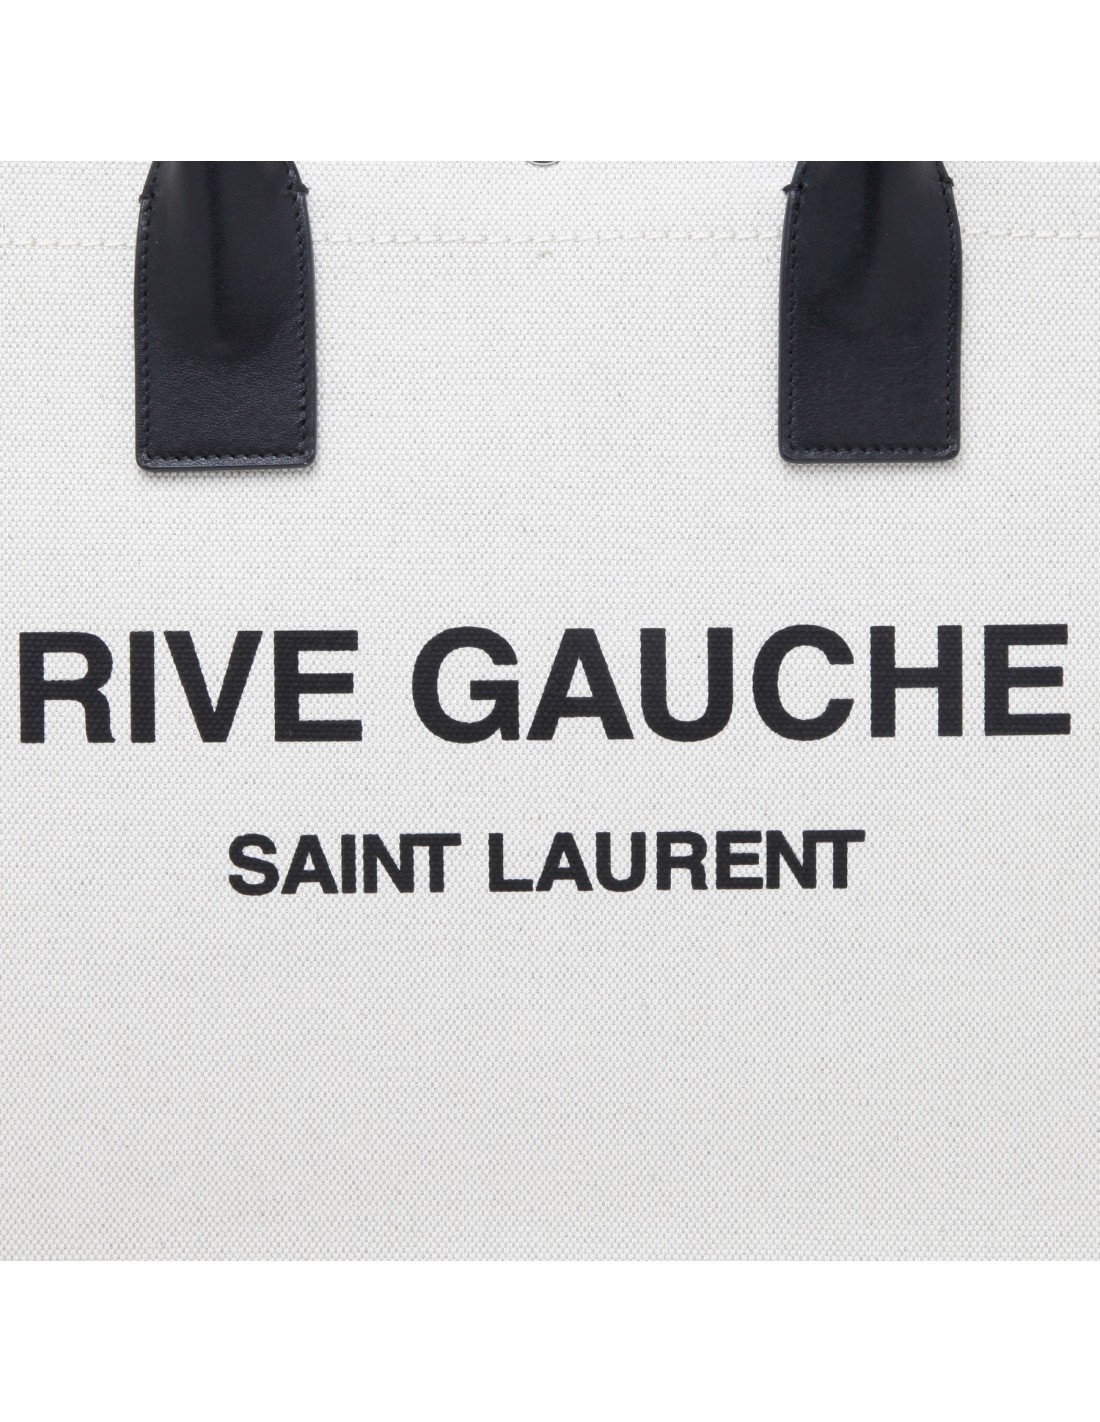 Our Saint Laurent Rive Gauche Tote Bag in Black styled by @yuliya 🔥 #